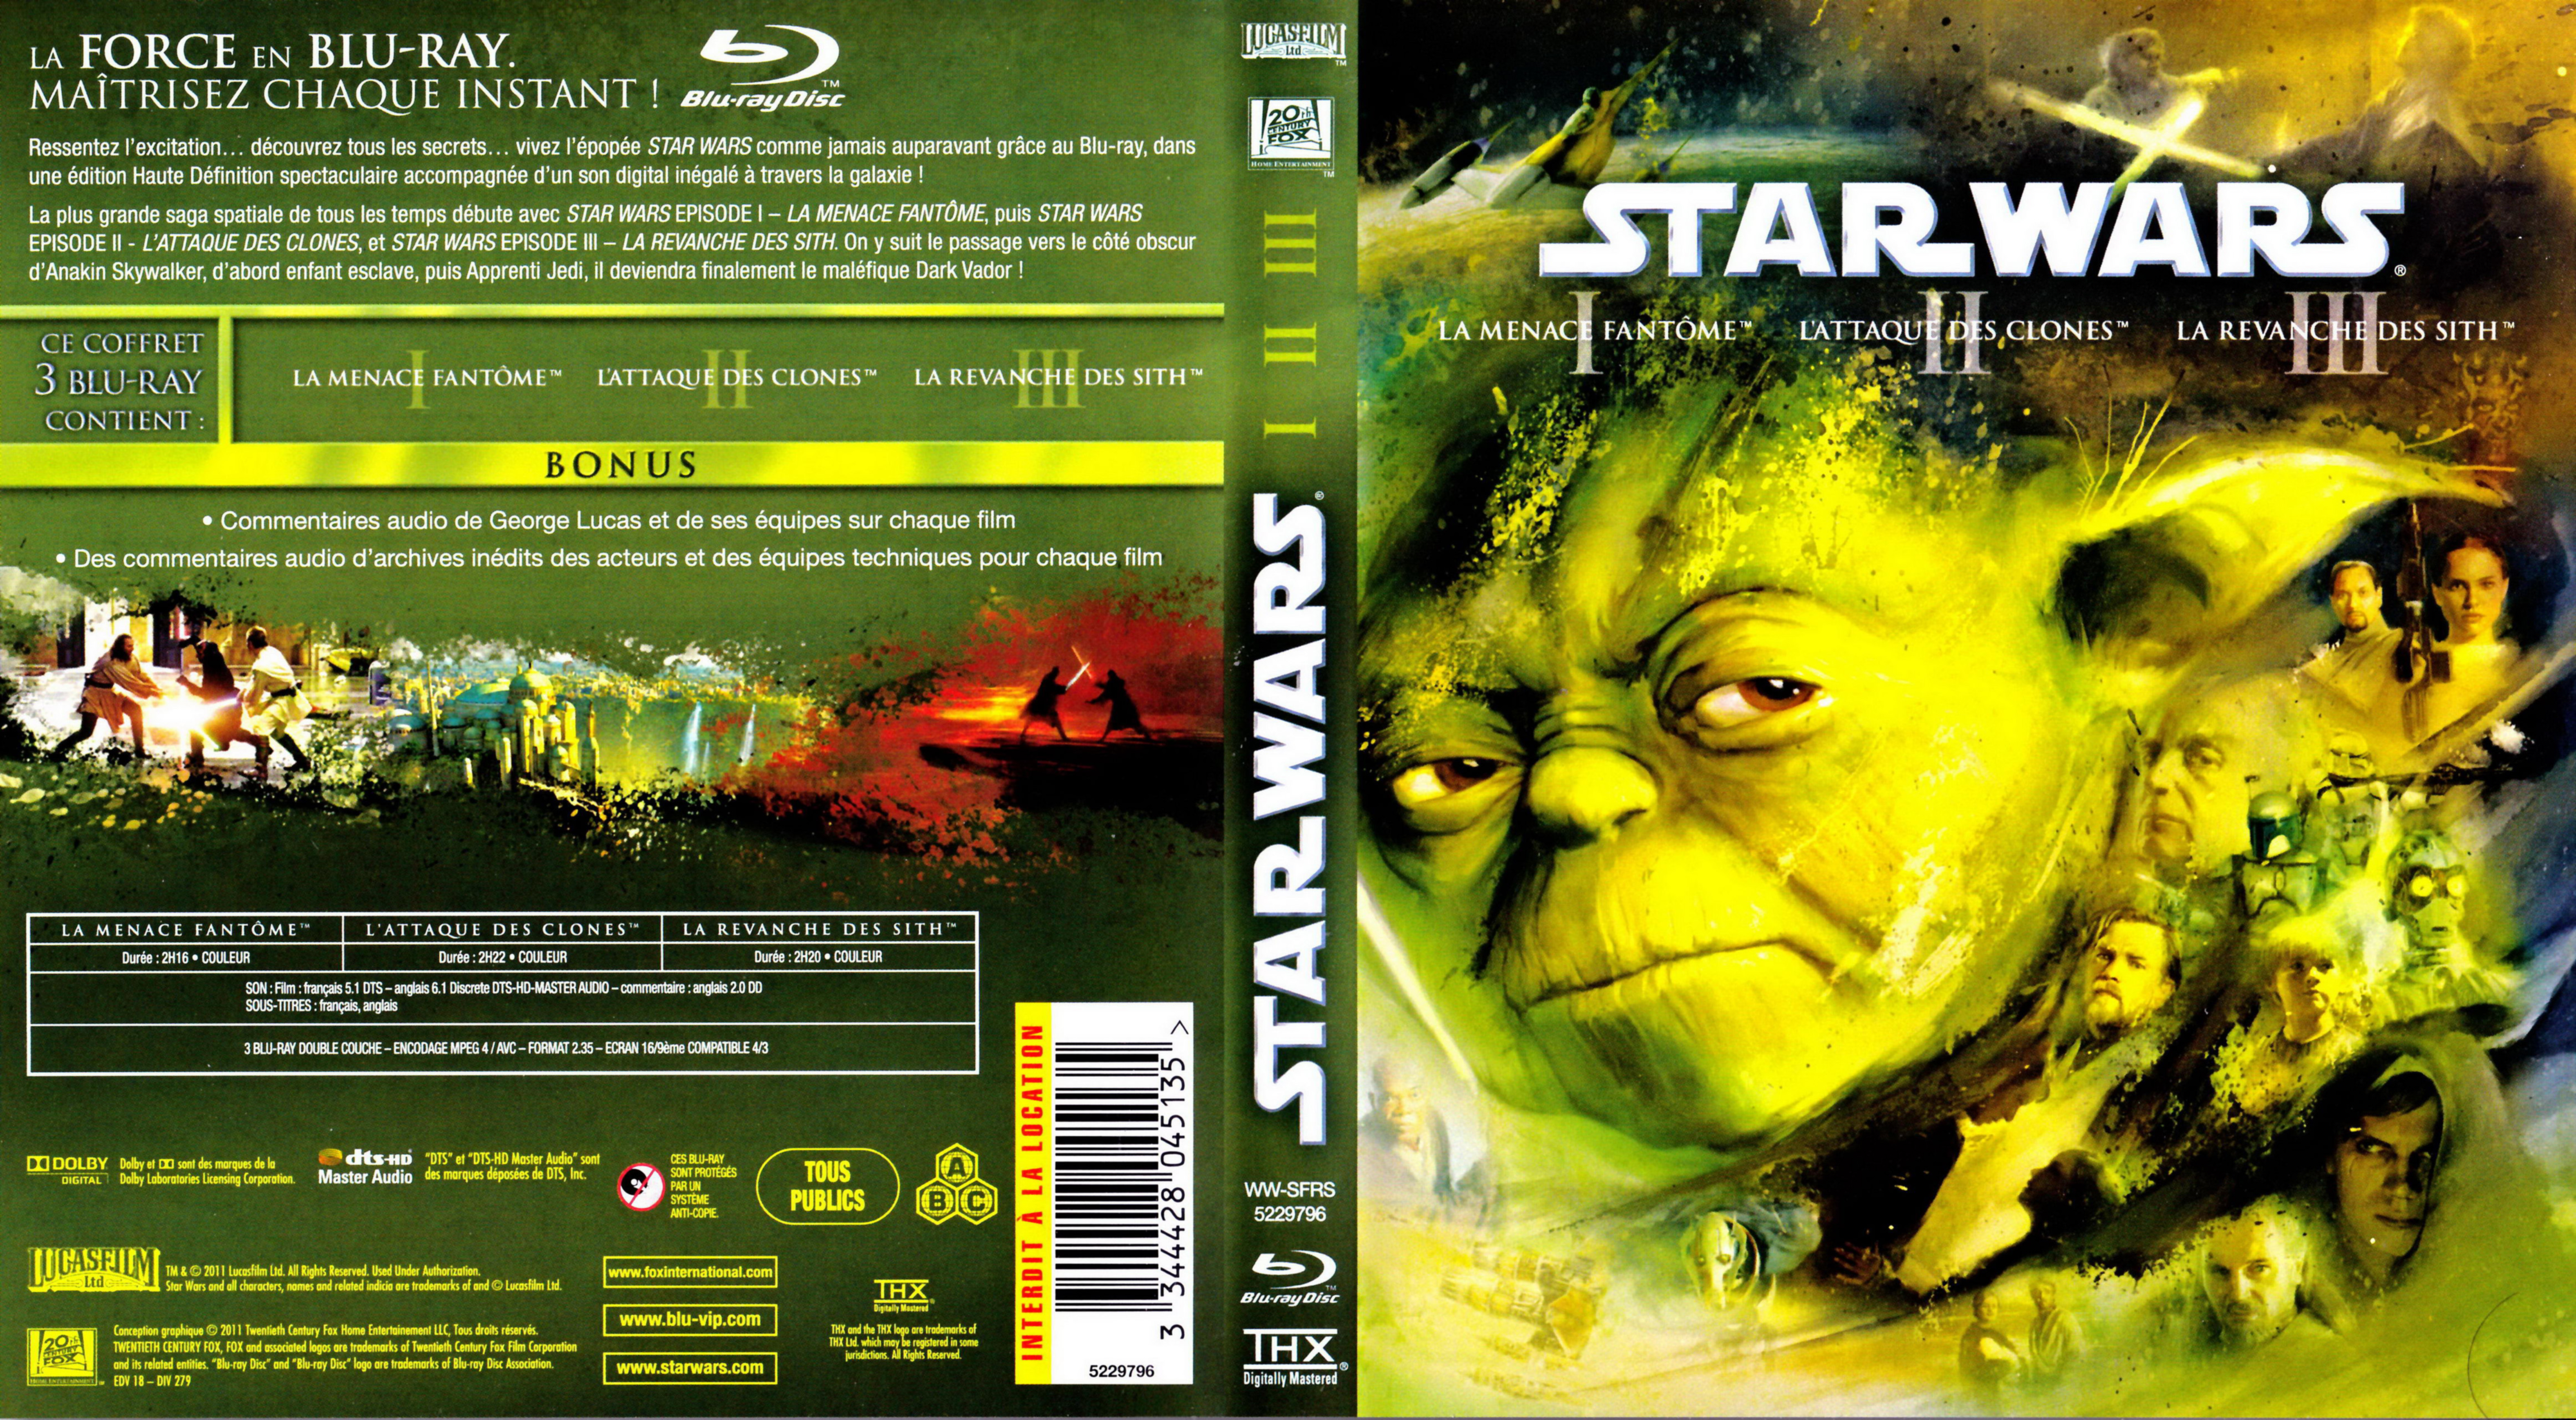 Jaquette DVD Star wars Episode 1 2 3 (BLU-RAY)